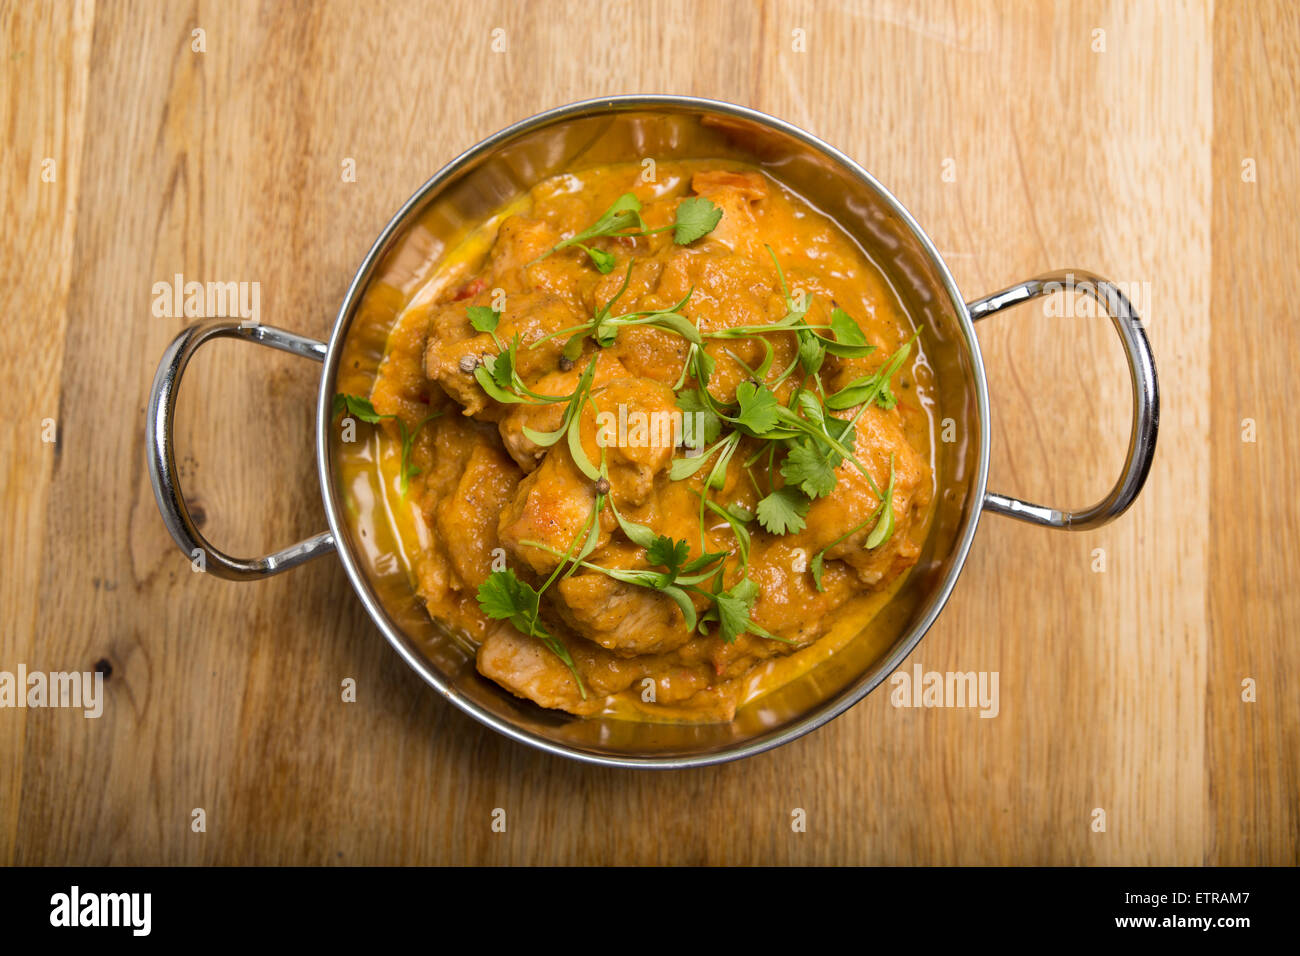 https://c8.alamy.com/comp/ETRAM7/a-metal-balti-bowl-with-chicken-curry-ETRAM7.jpg